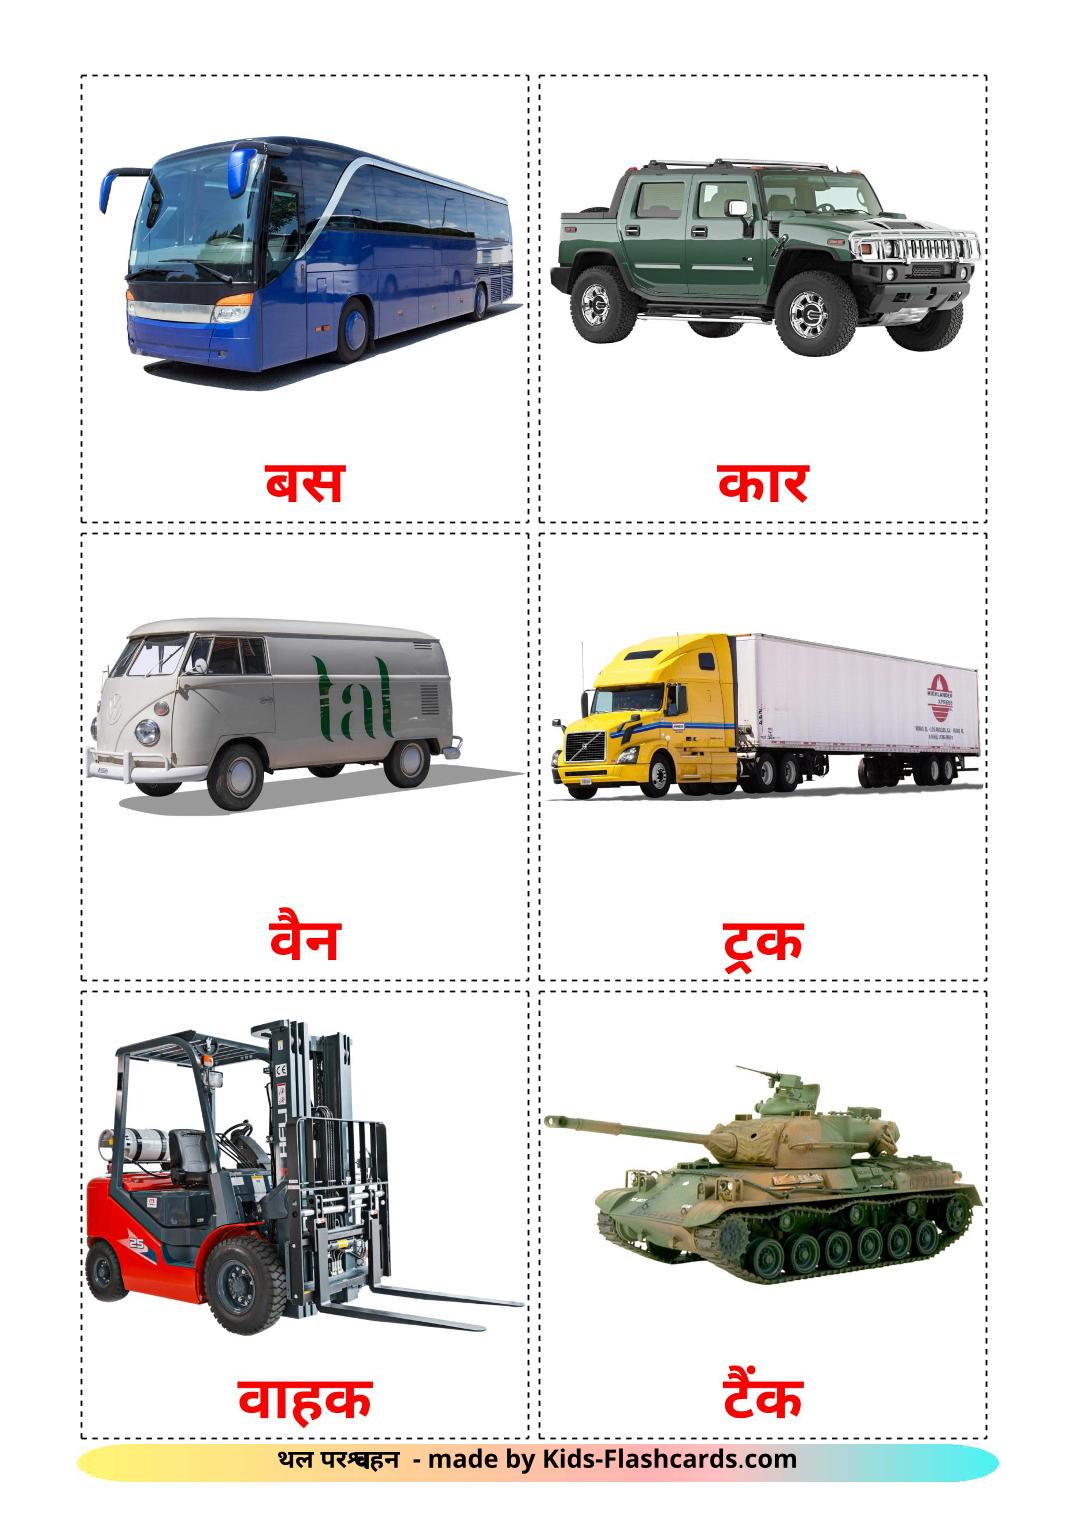 Transporte terrestre - 27 fichas de hindi para imprimir gratis 